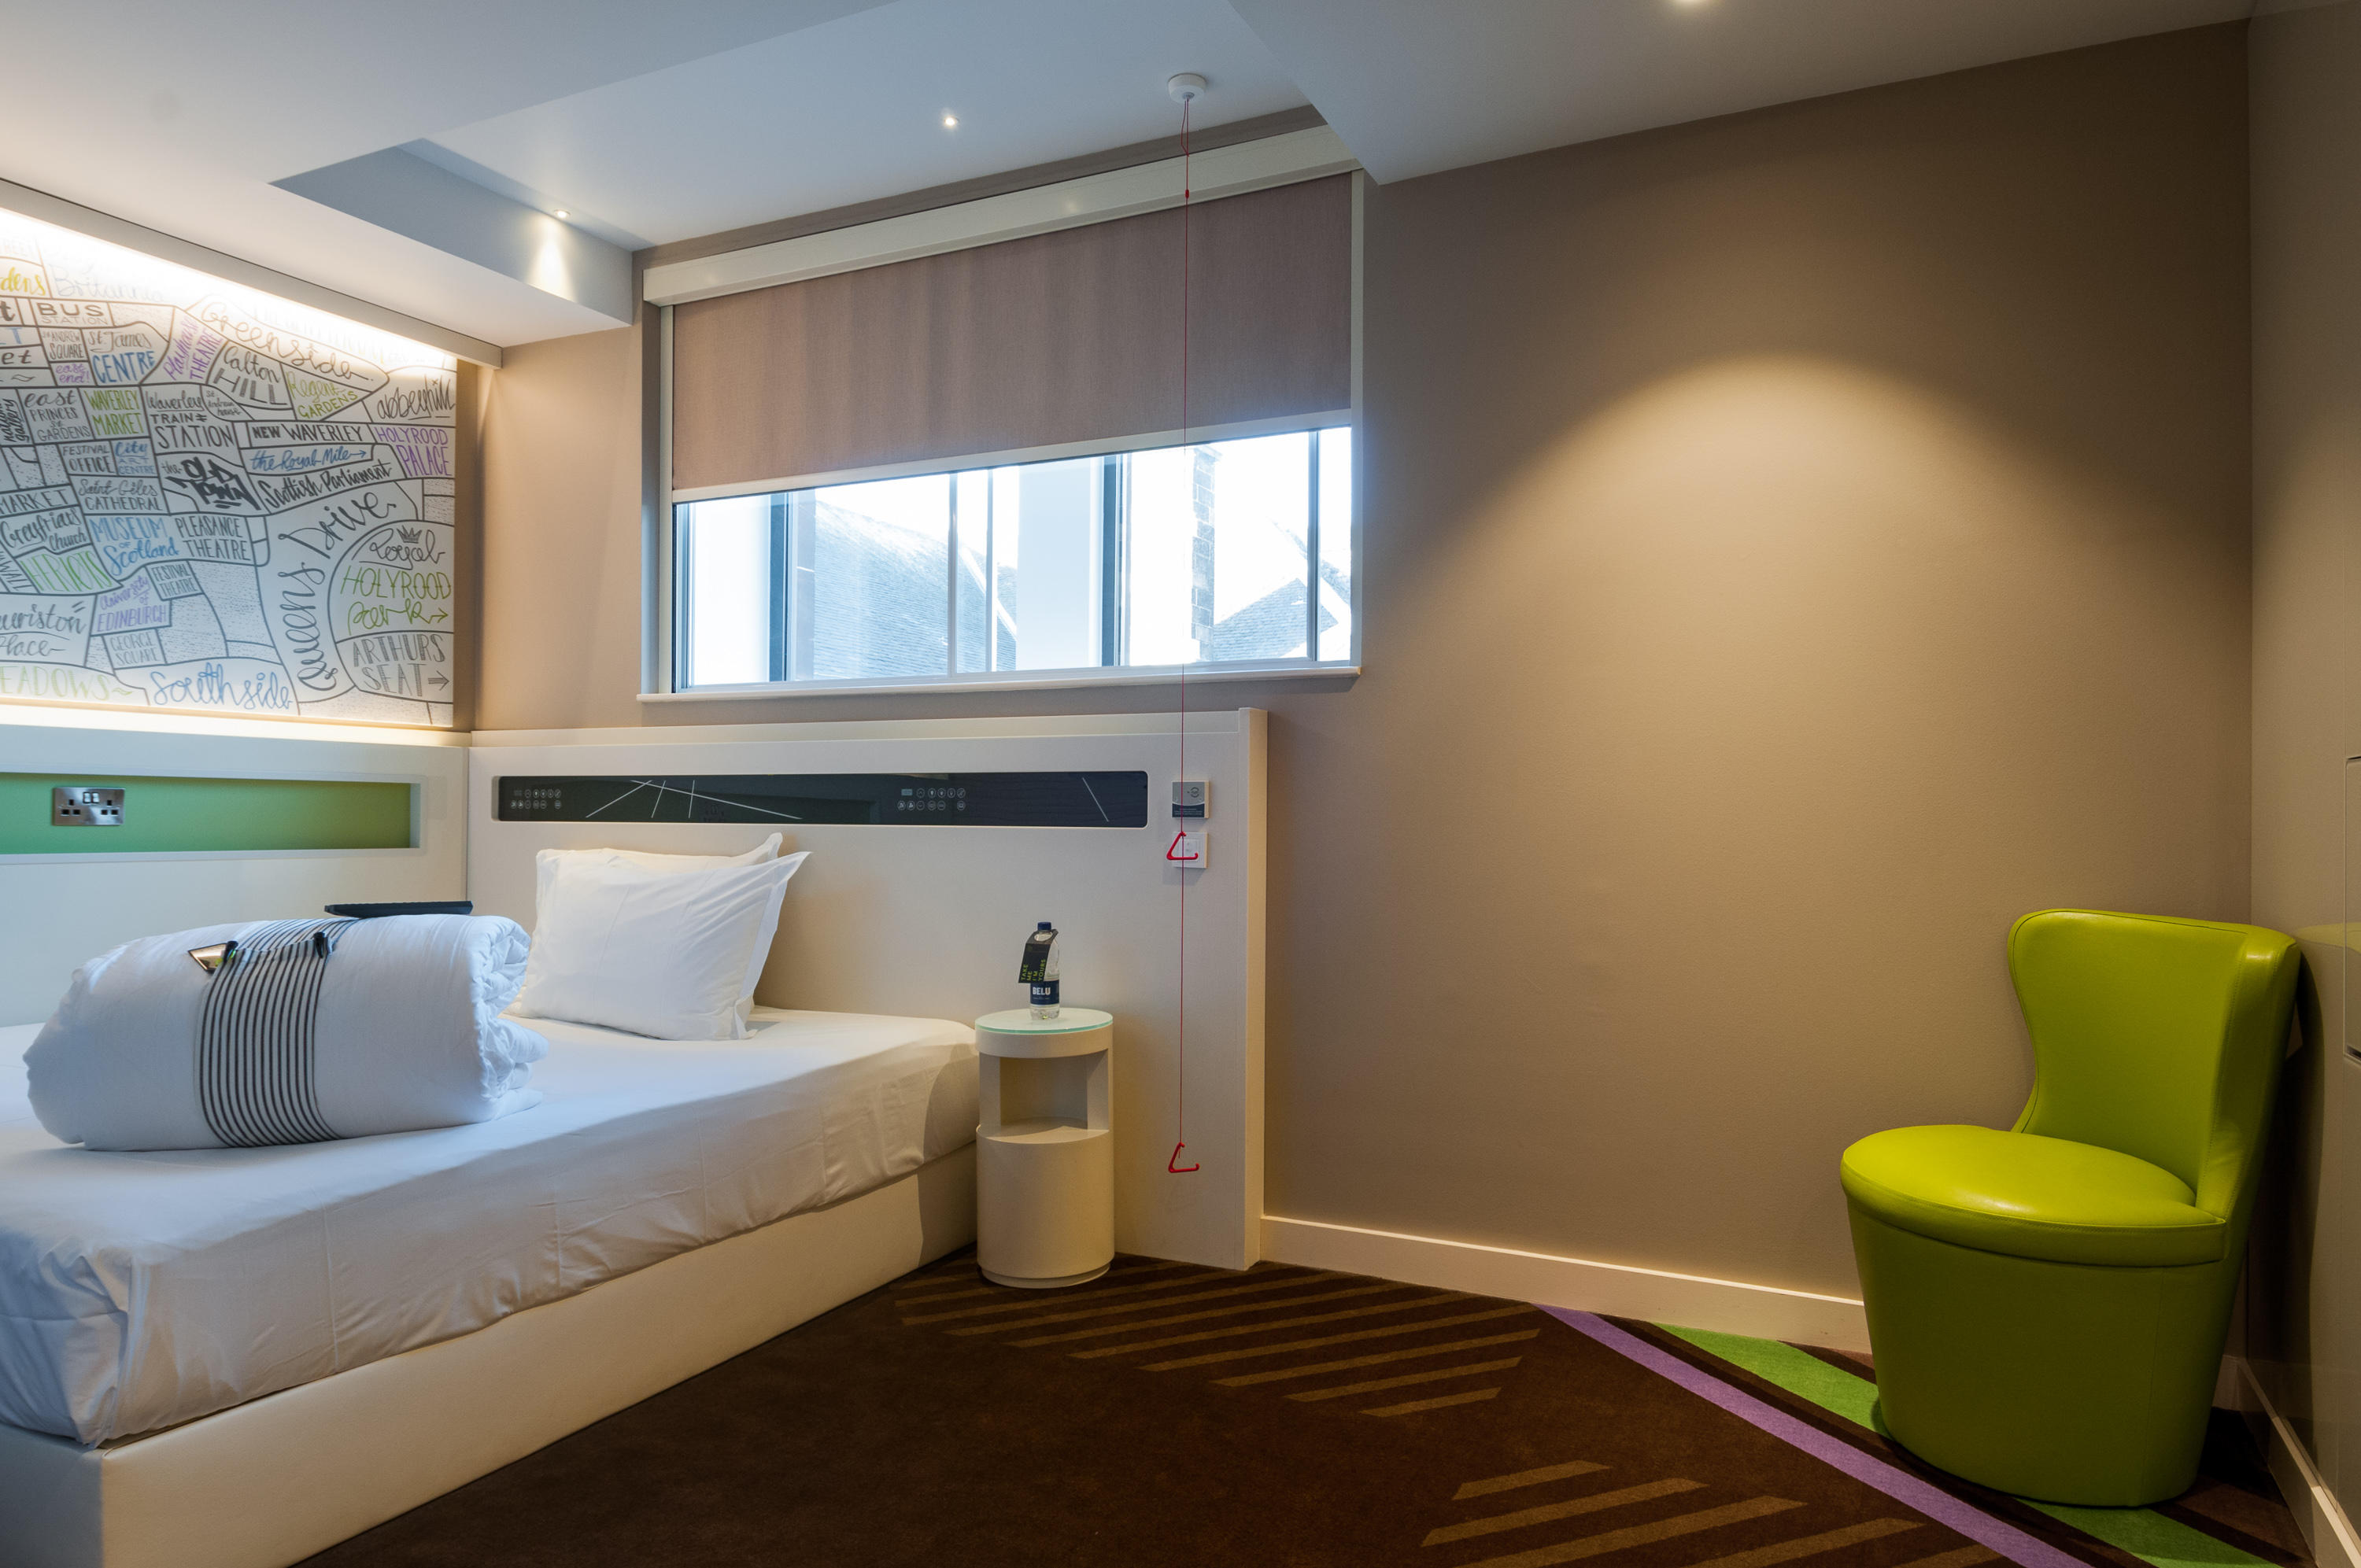 hub by Premier Inn accessible room hub by Premier Inn London Soho hotel London 03333 213104